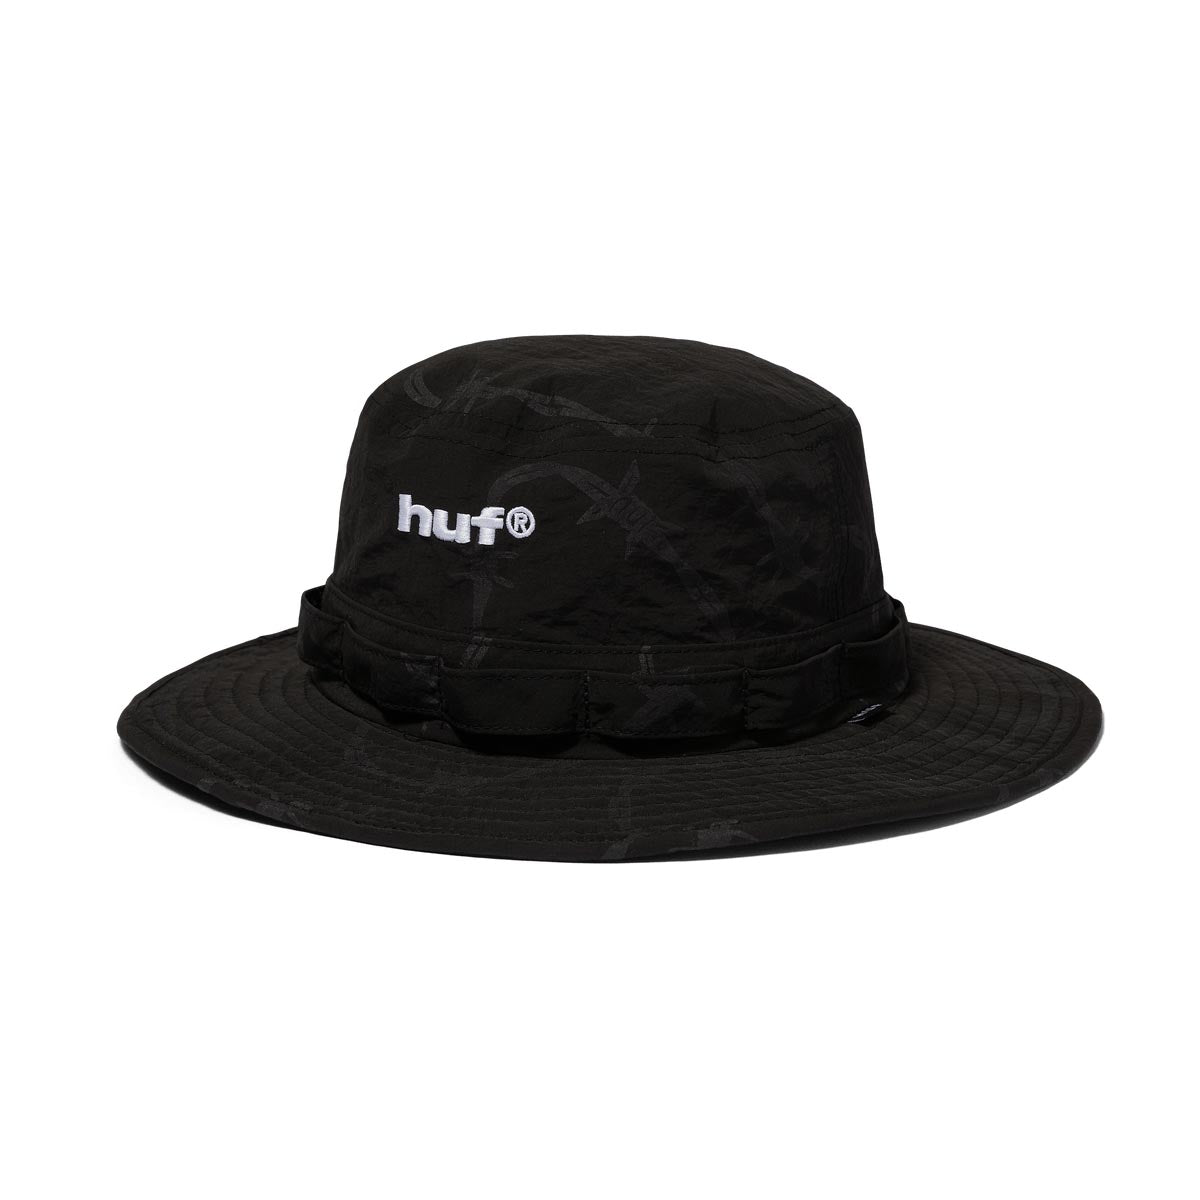 HUF Reservoir Boonie Hat - Black image 1